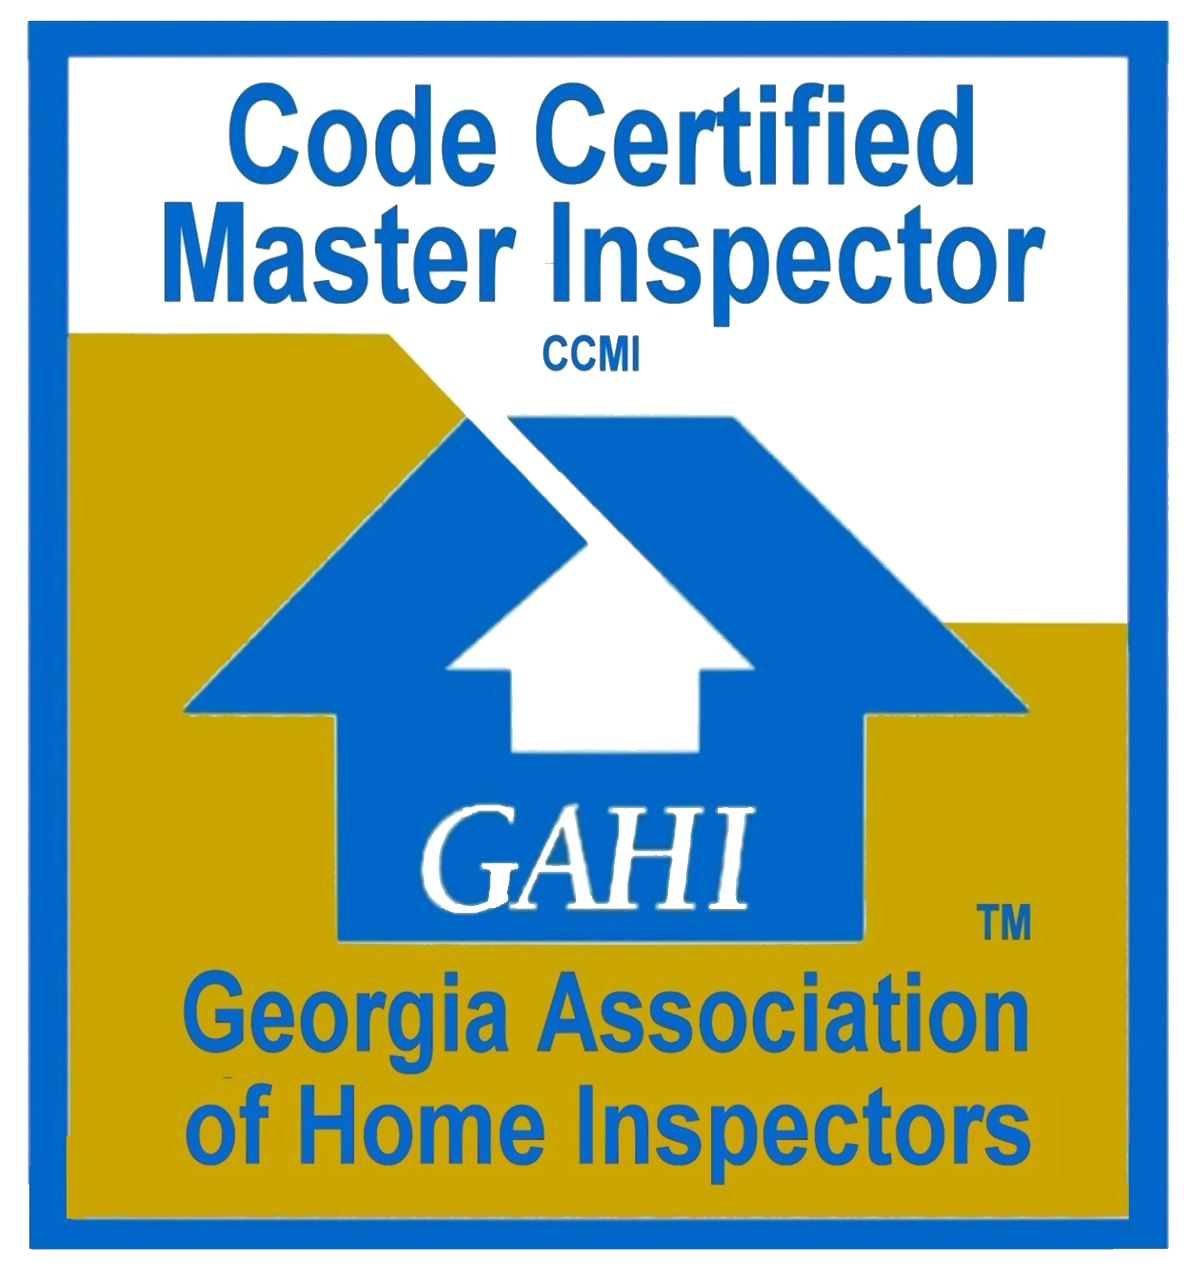 GAHI certified master inspector logo